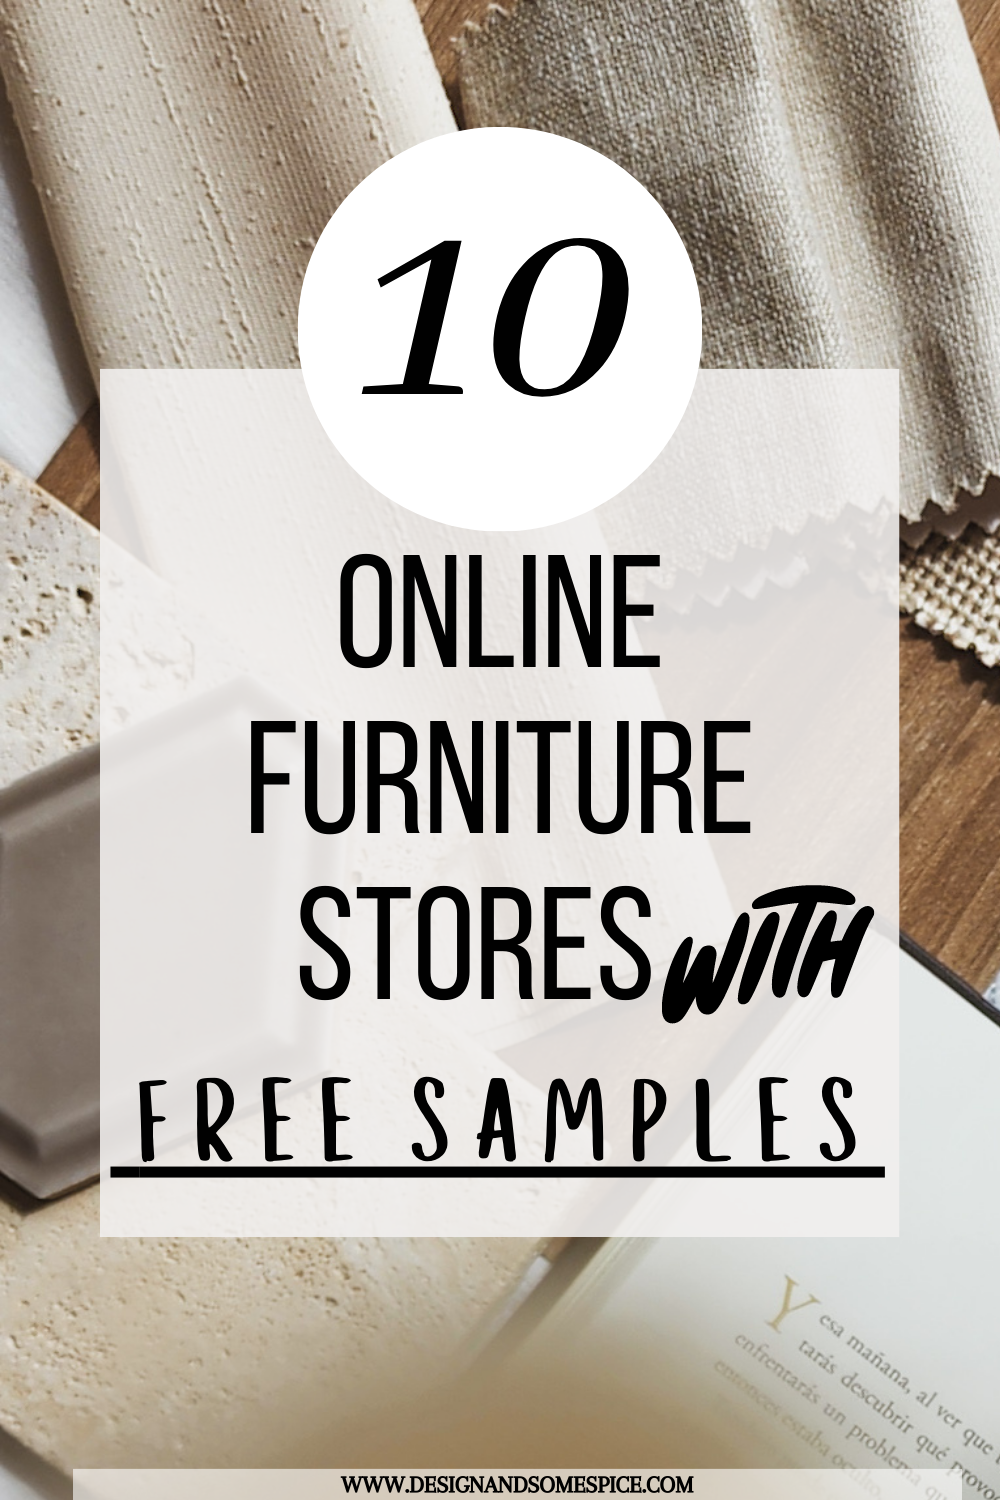 Free furniture sample availability